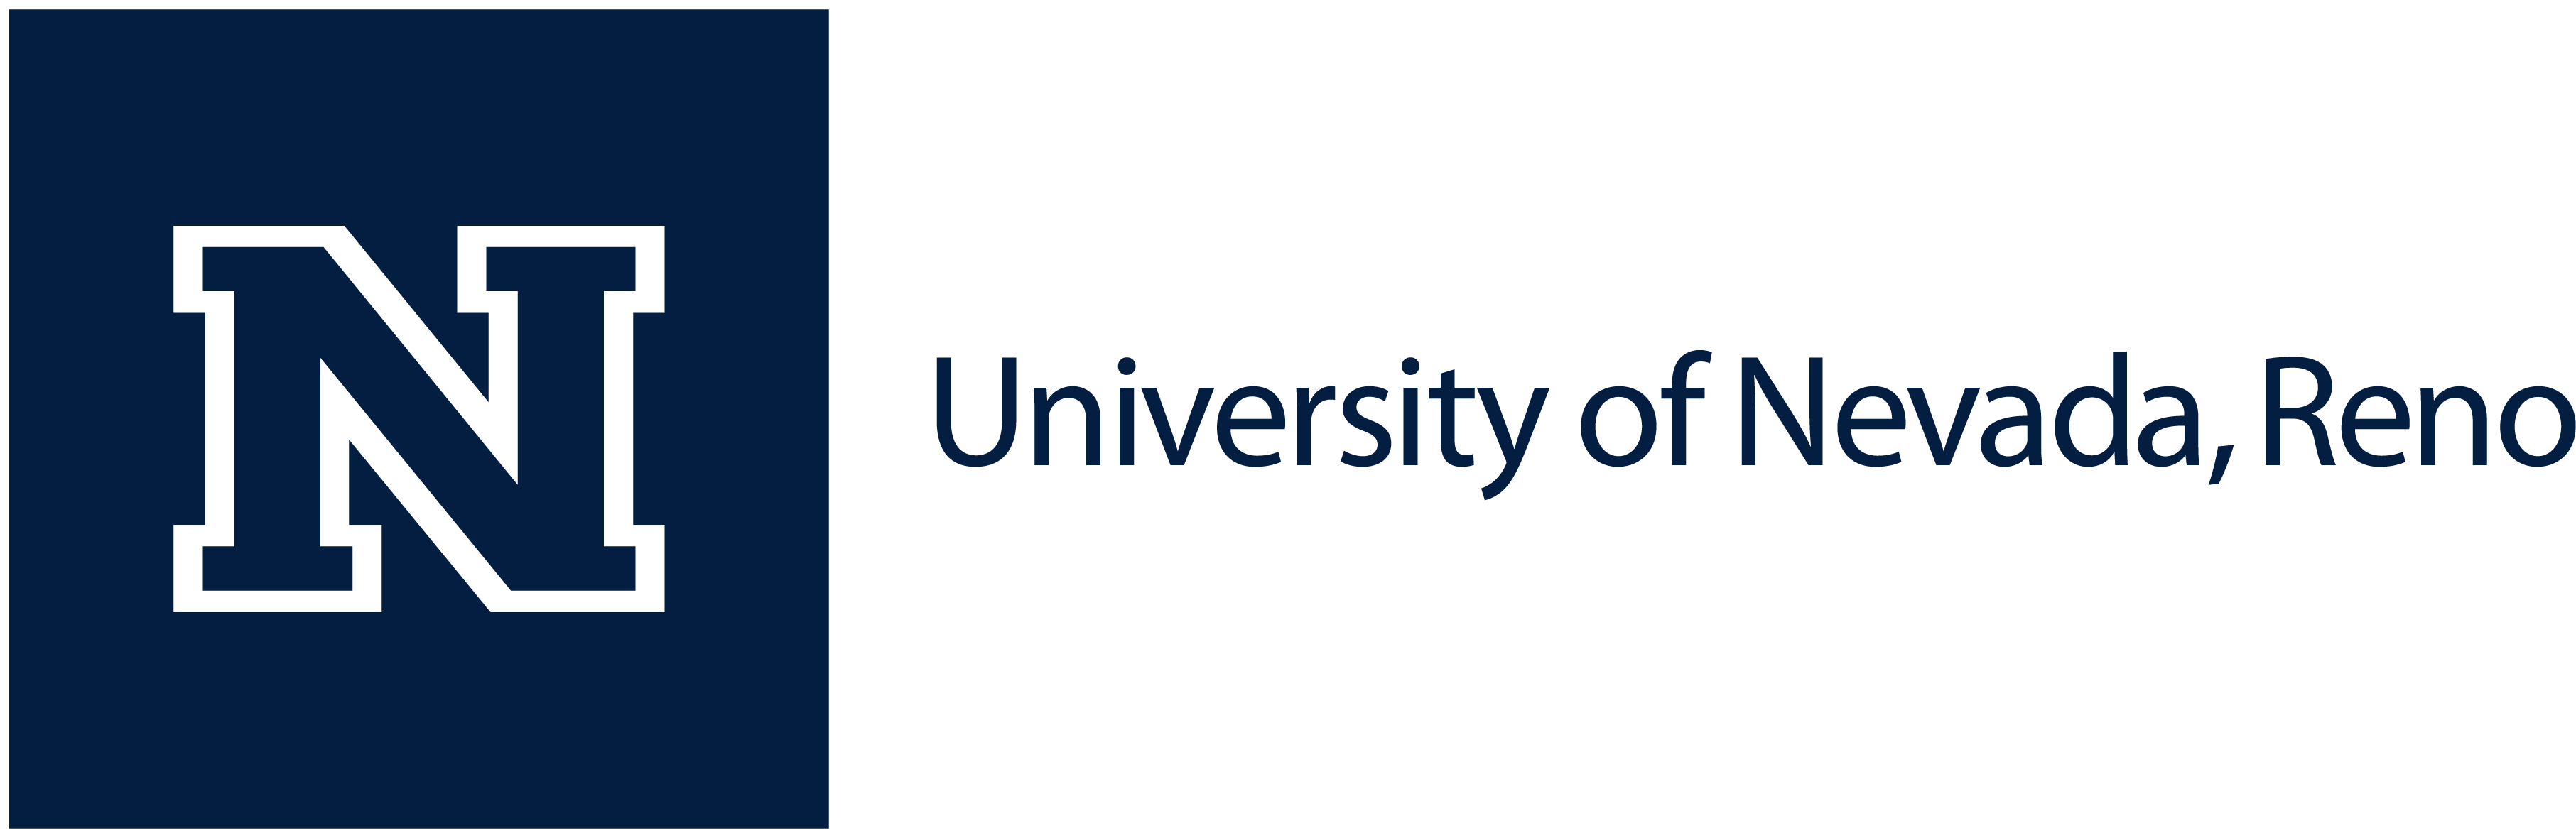 University of Nevada, Reno school logo